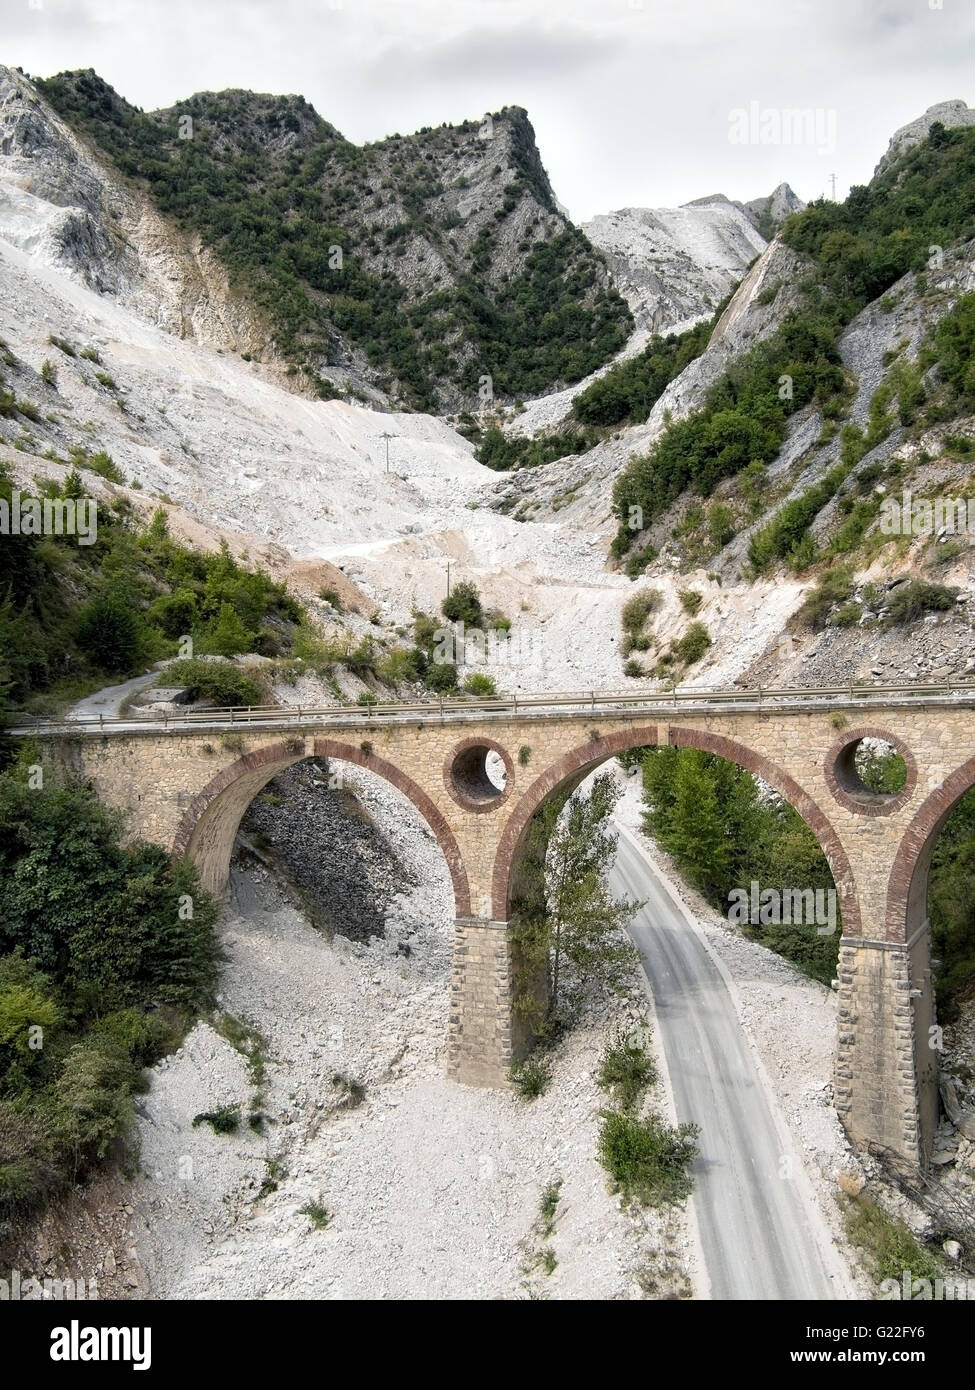 Ponti di Vara weißen Marmor-Steinbruch, Carrara, Italien. Grauer Tag. Berühmte Brücke. Stockfoto